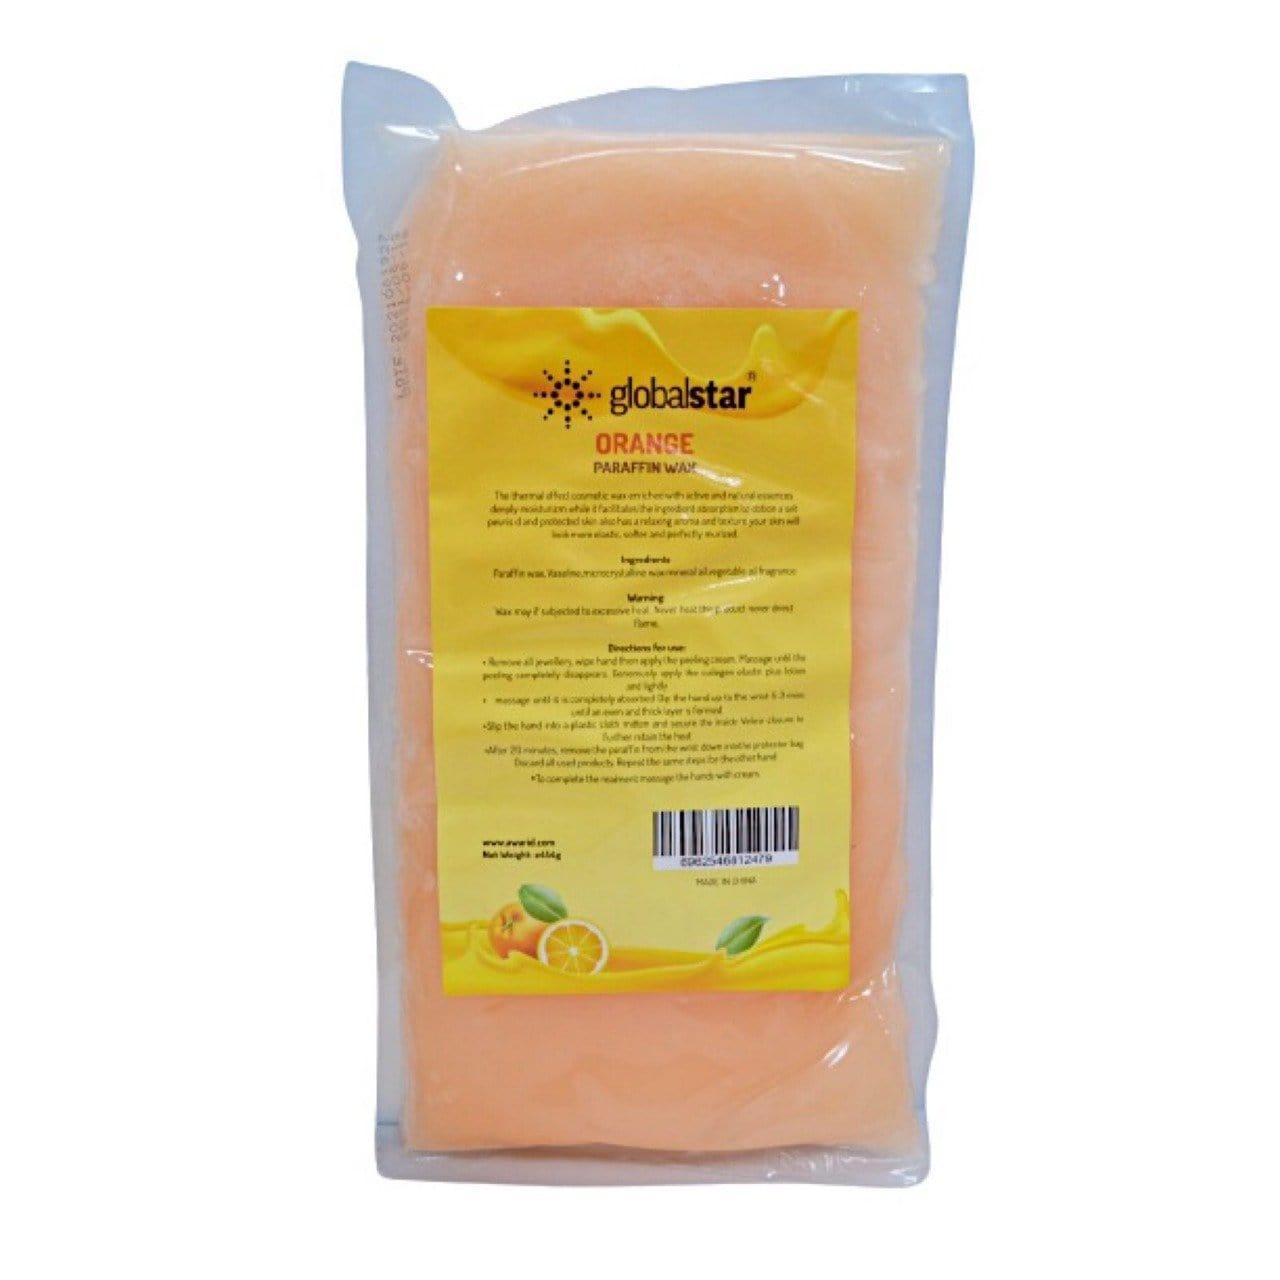 Globalstar Paraffin Wax Orange 454g - Awarid UAE